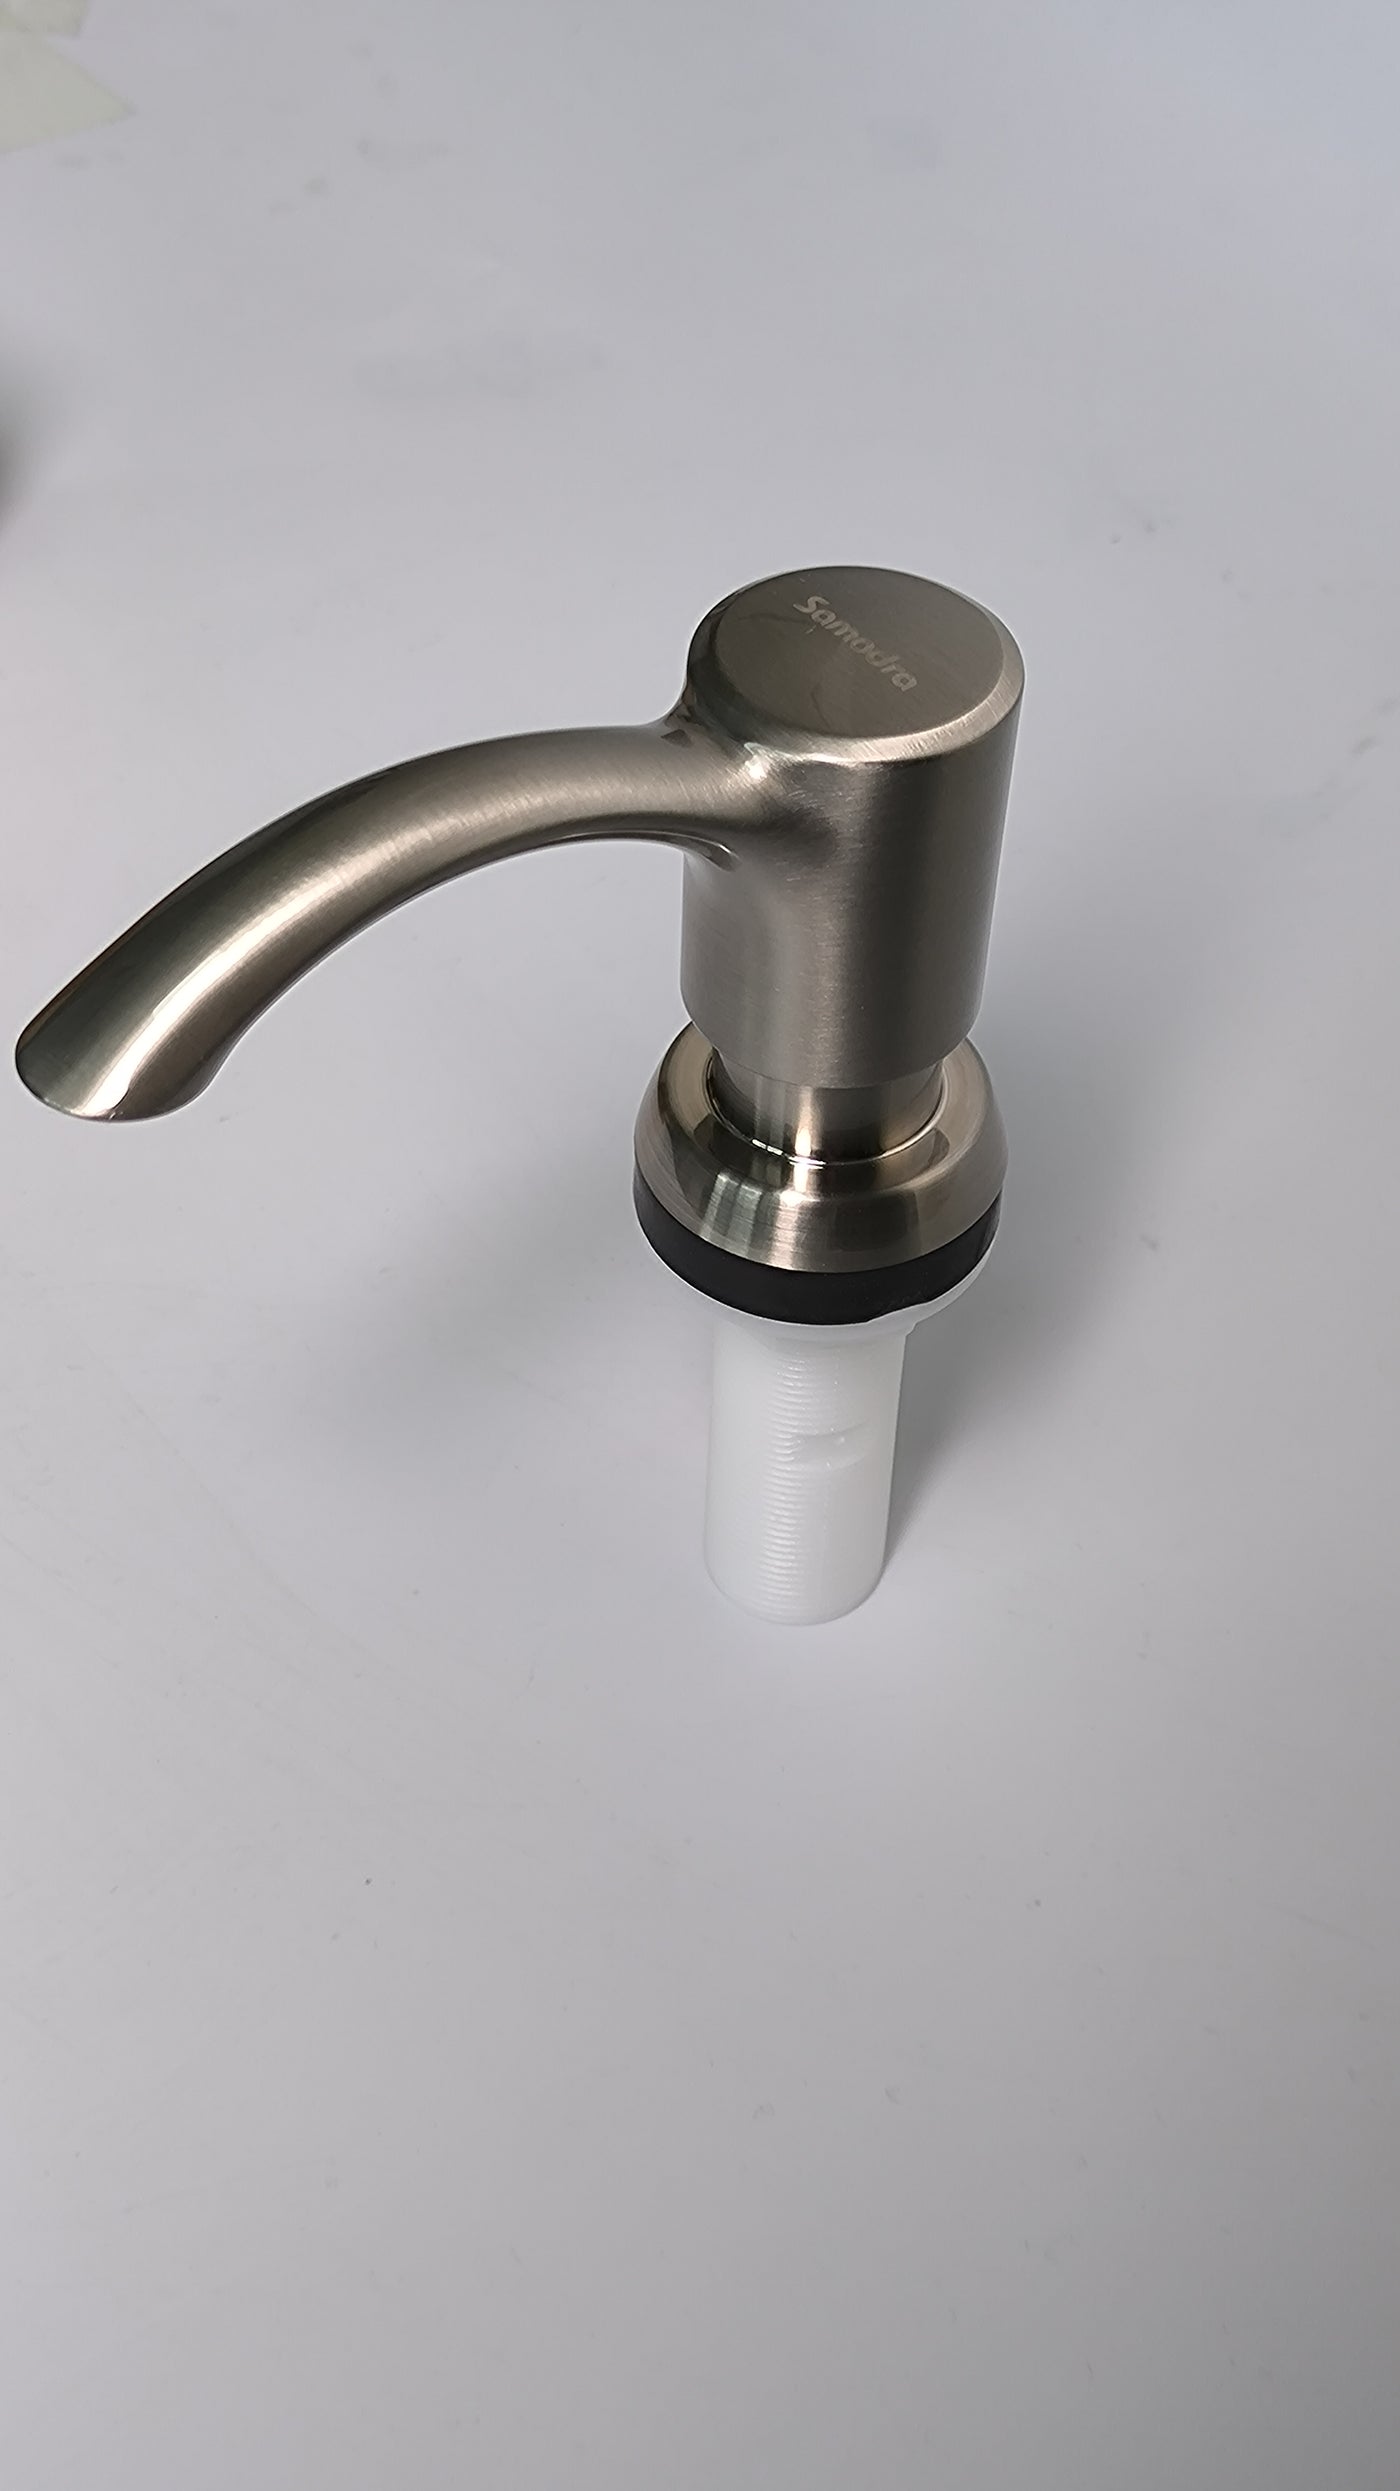 Samodra Soap Dispenser for Kitchen Sink Counter Dispenser 17 OZ Bottle Built in Refill from The Top (Brushed Nickel)